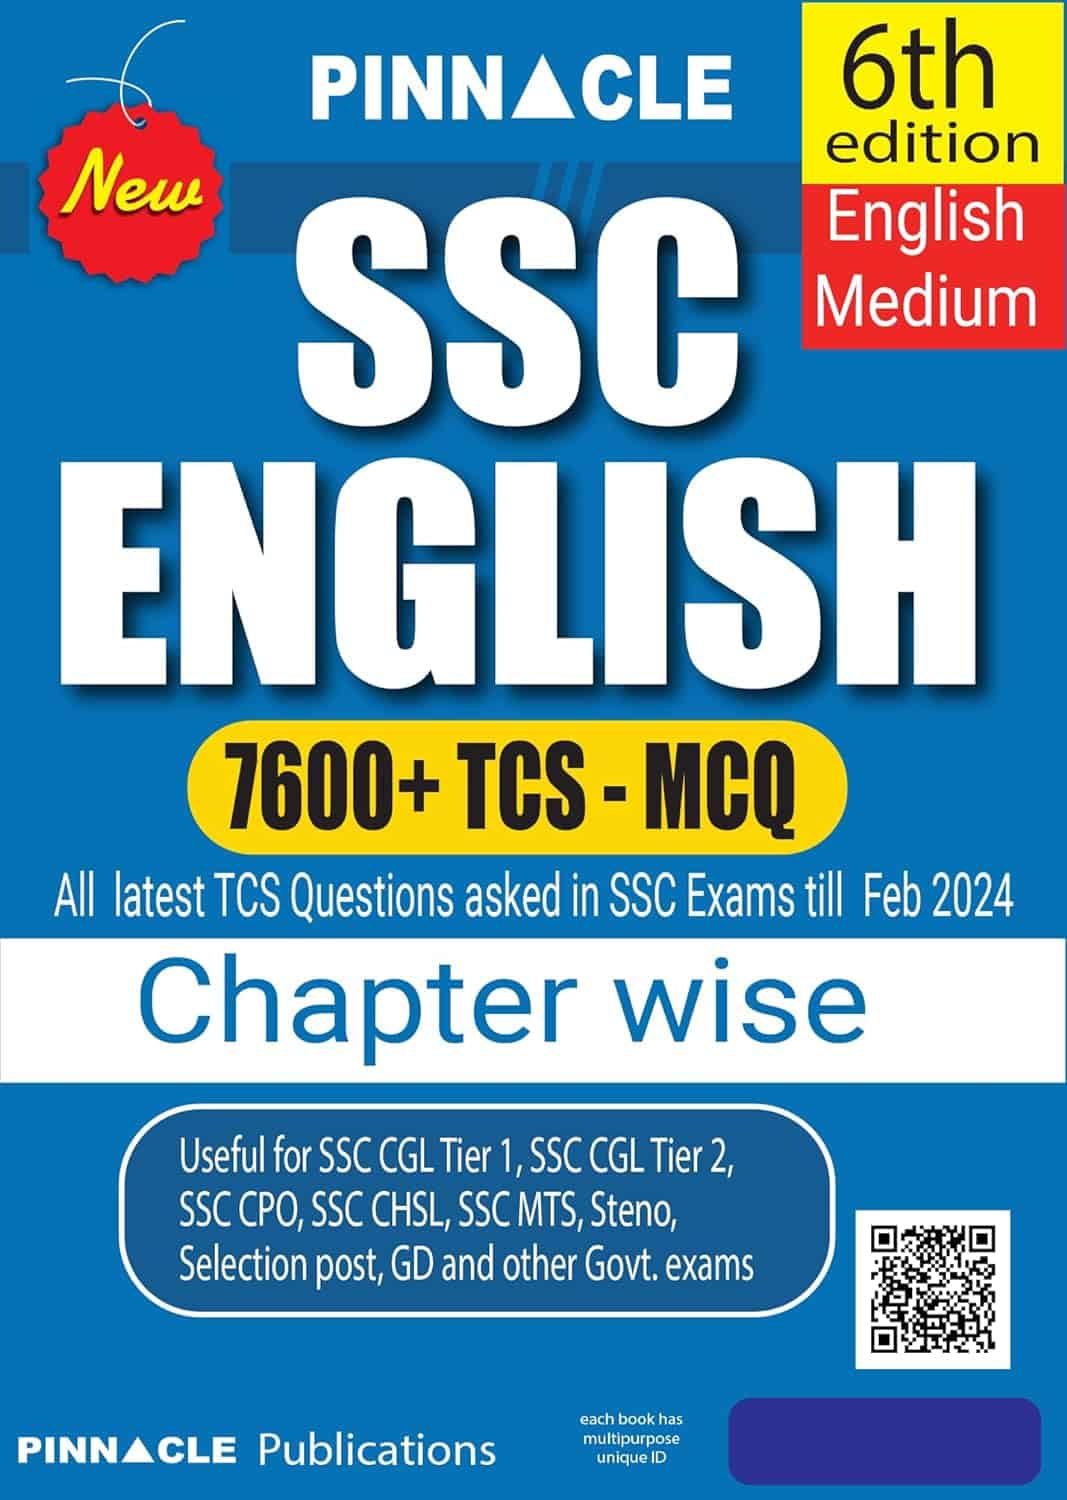 7600+ TCS MCQ SSC English [6th Edition] Book (English Medium) - Pinnacle